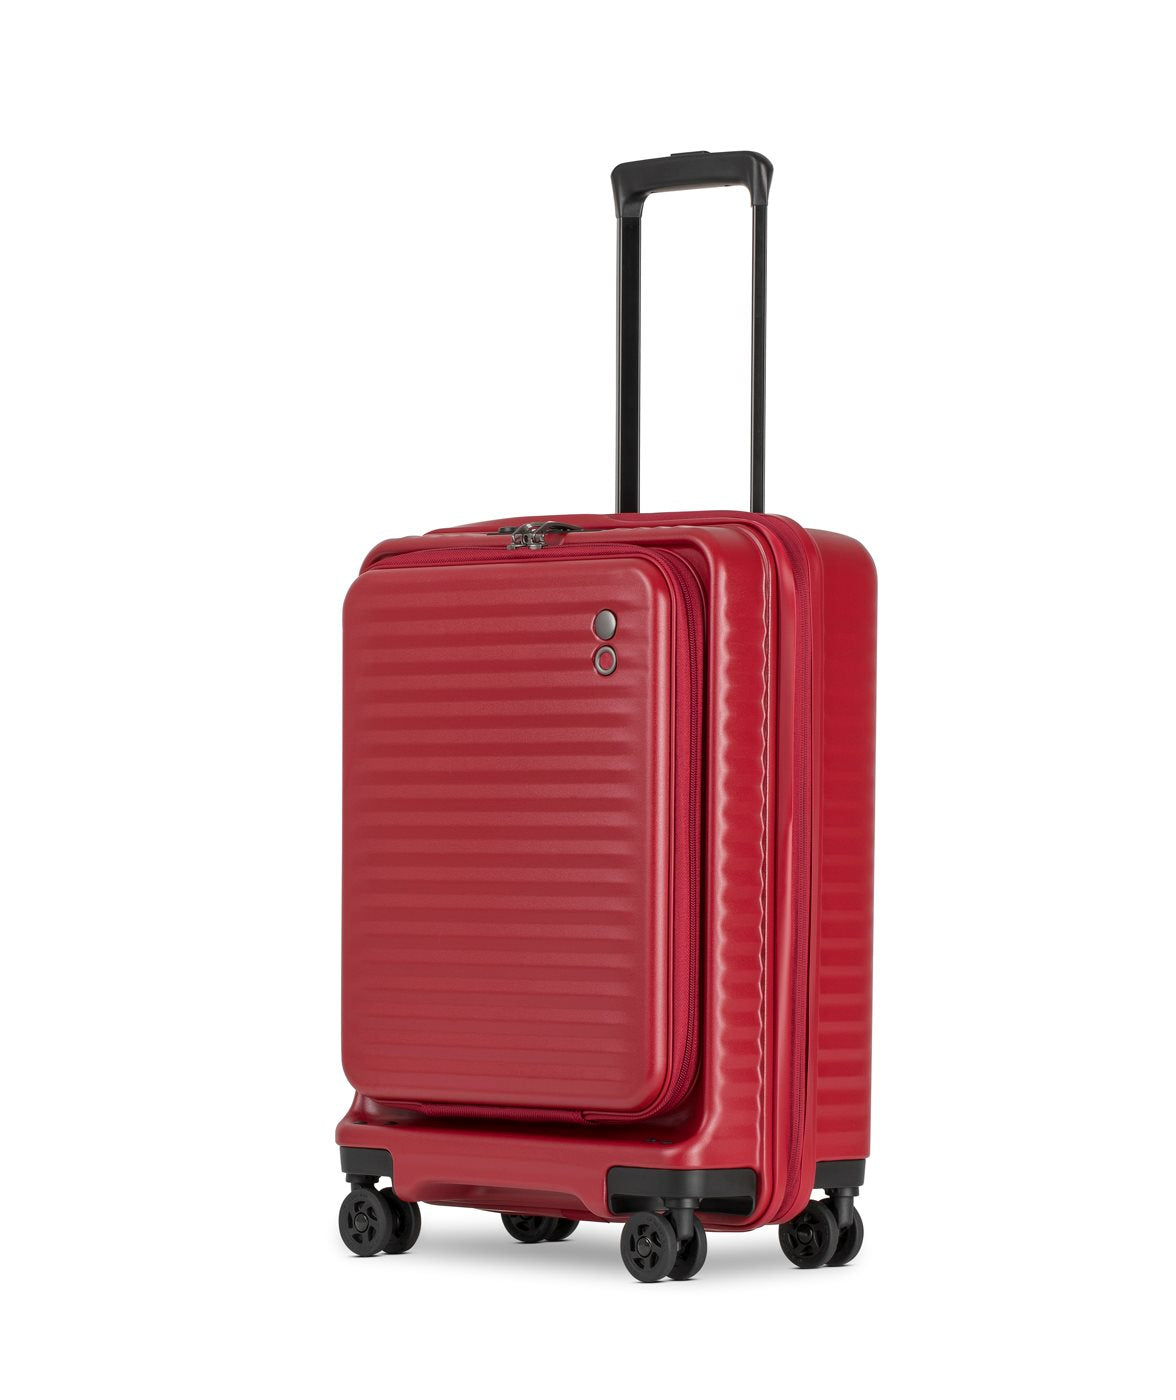 Echolac Celestra 4-Wheel Luggage Echolac Red S Handbagage Koffer - Reisartikelen-nl